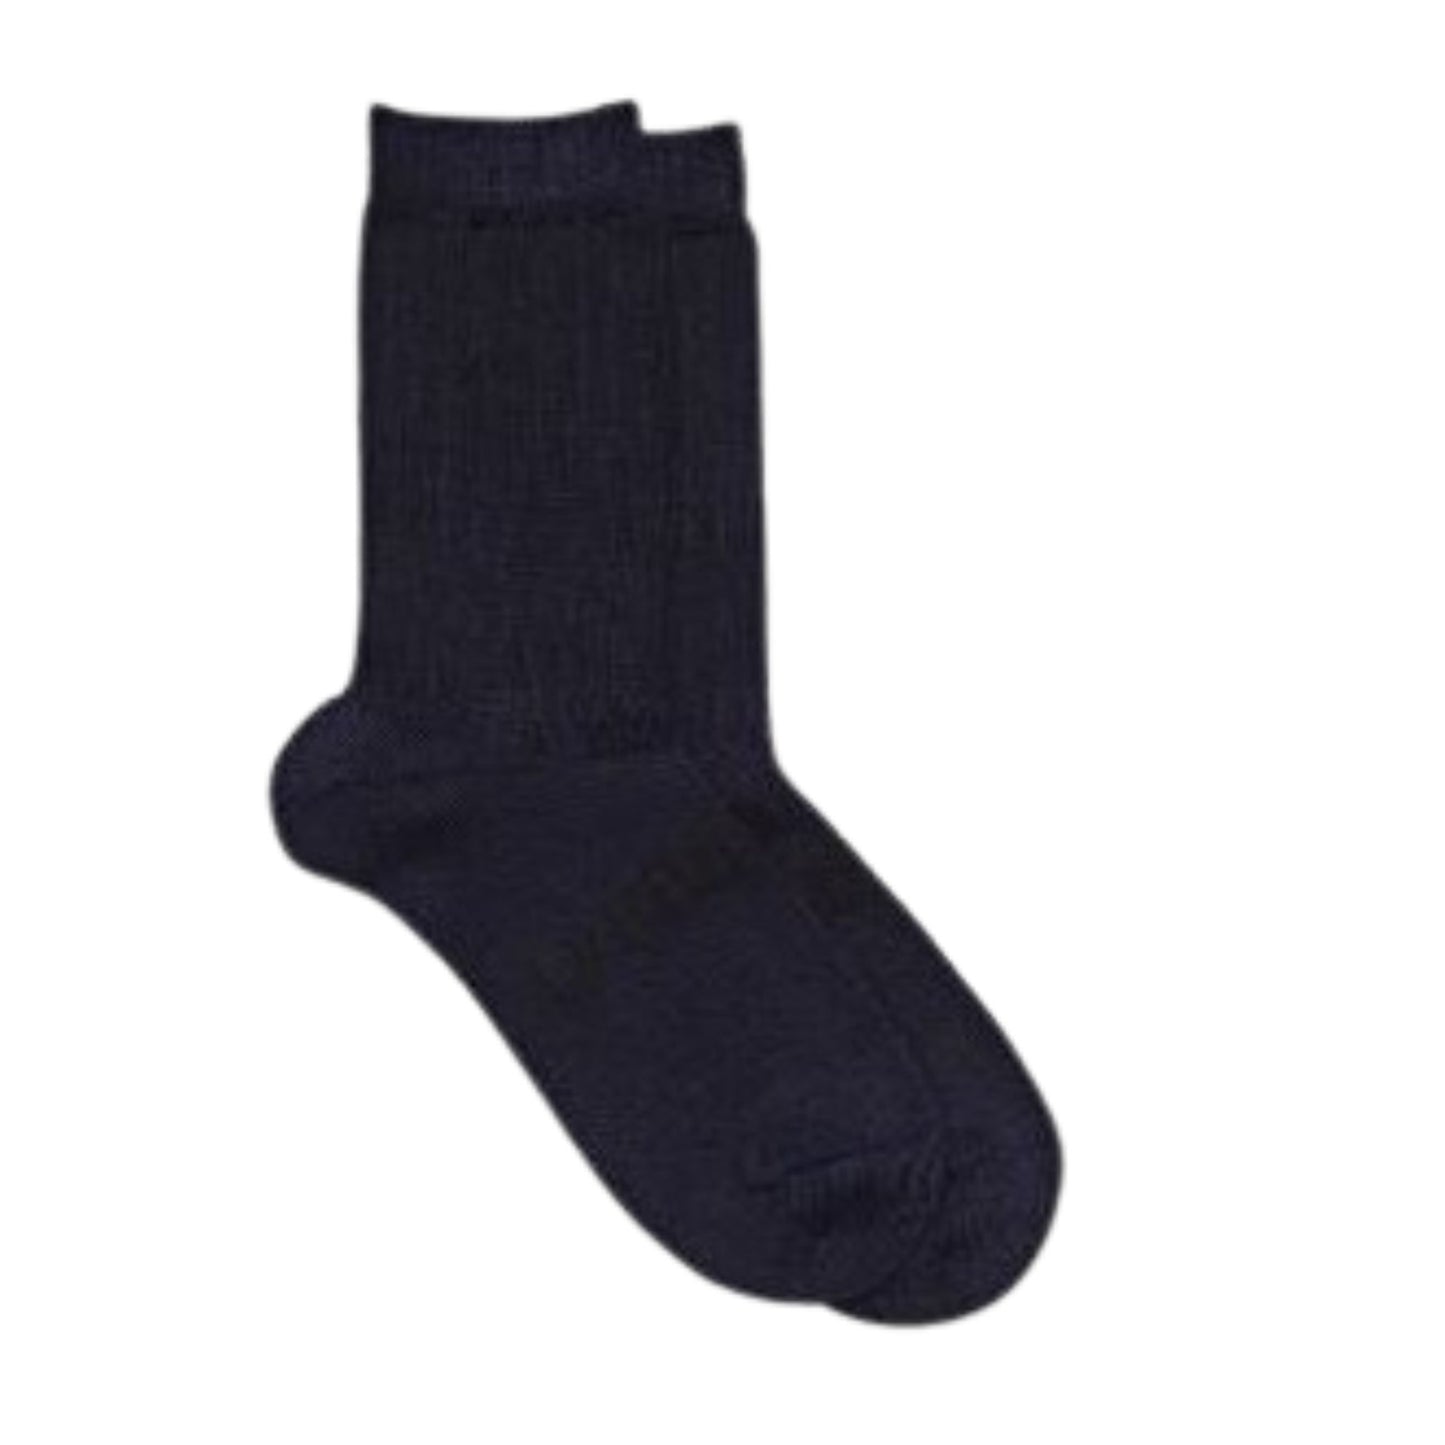 Navy ribbed merino socks